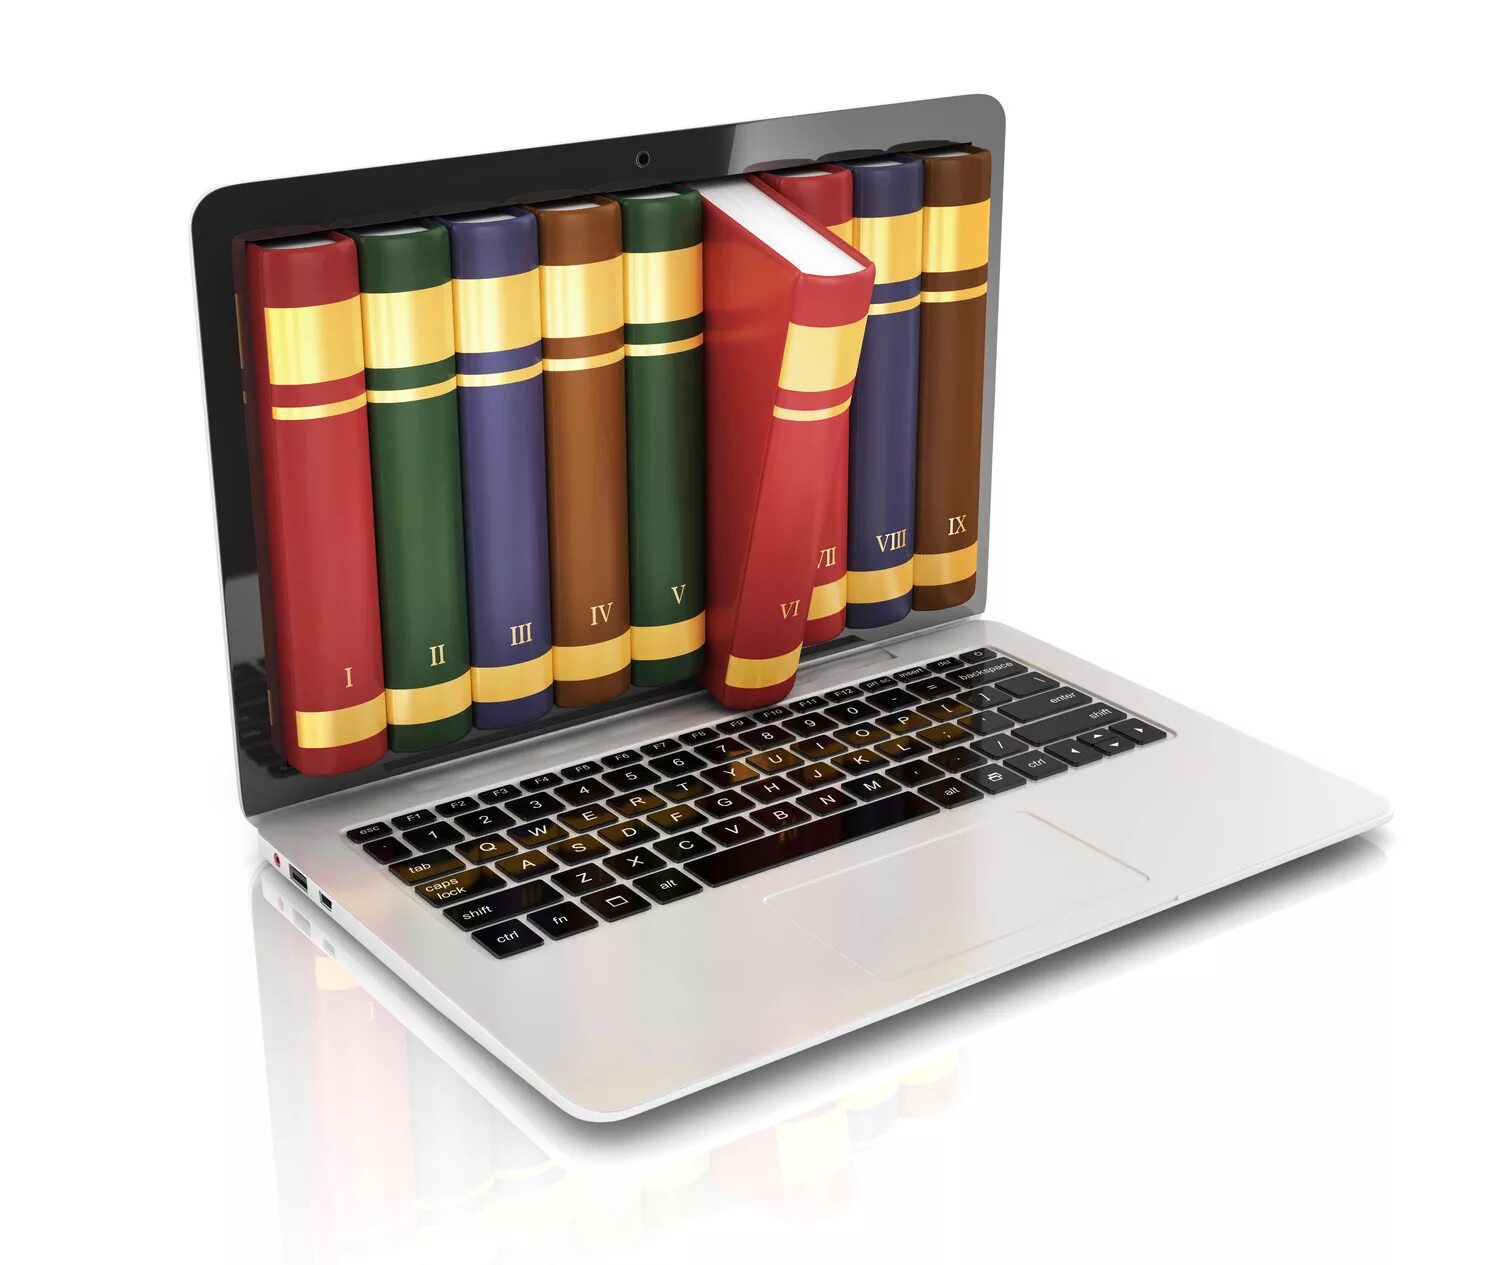 Resource library. Электронная библиотека. Цифровая библиотека. Книги и компьютер. Компьютеры в библиотеке.